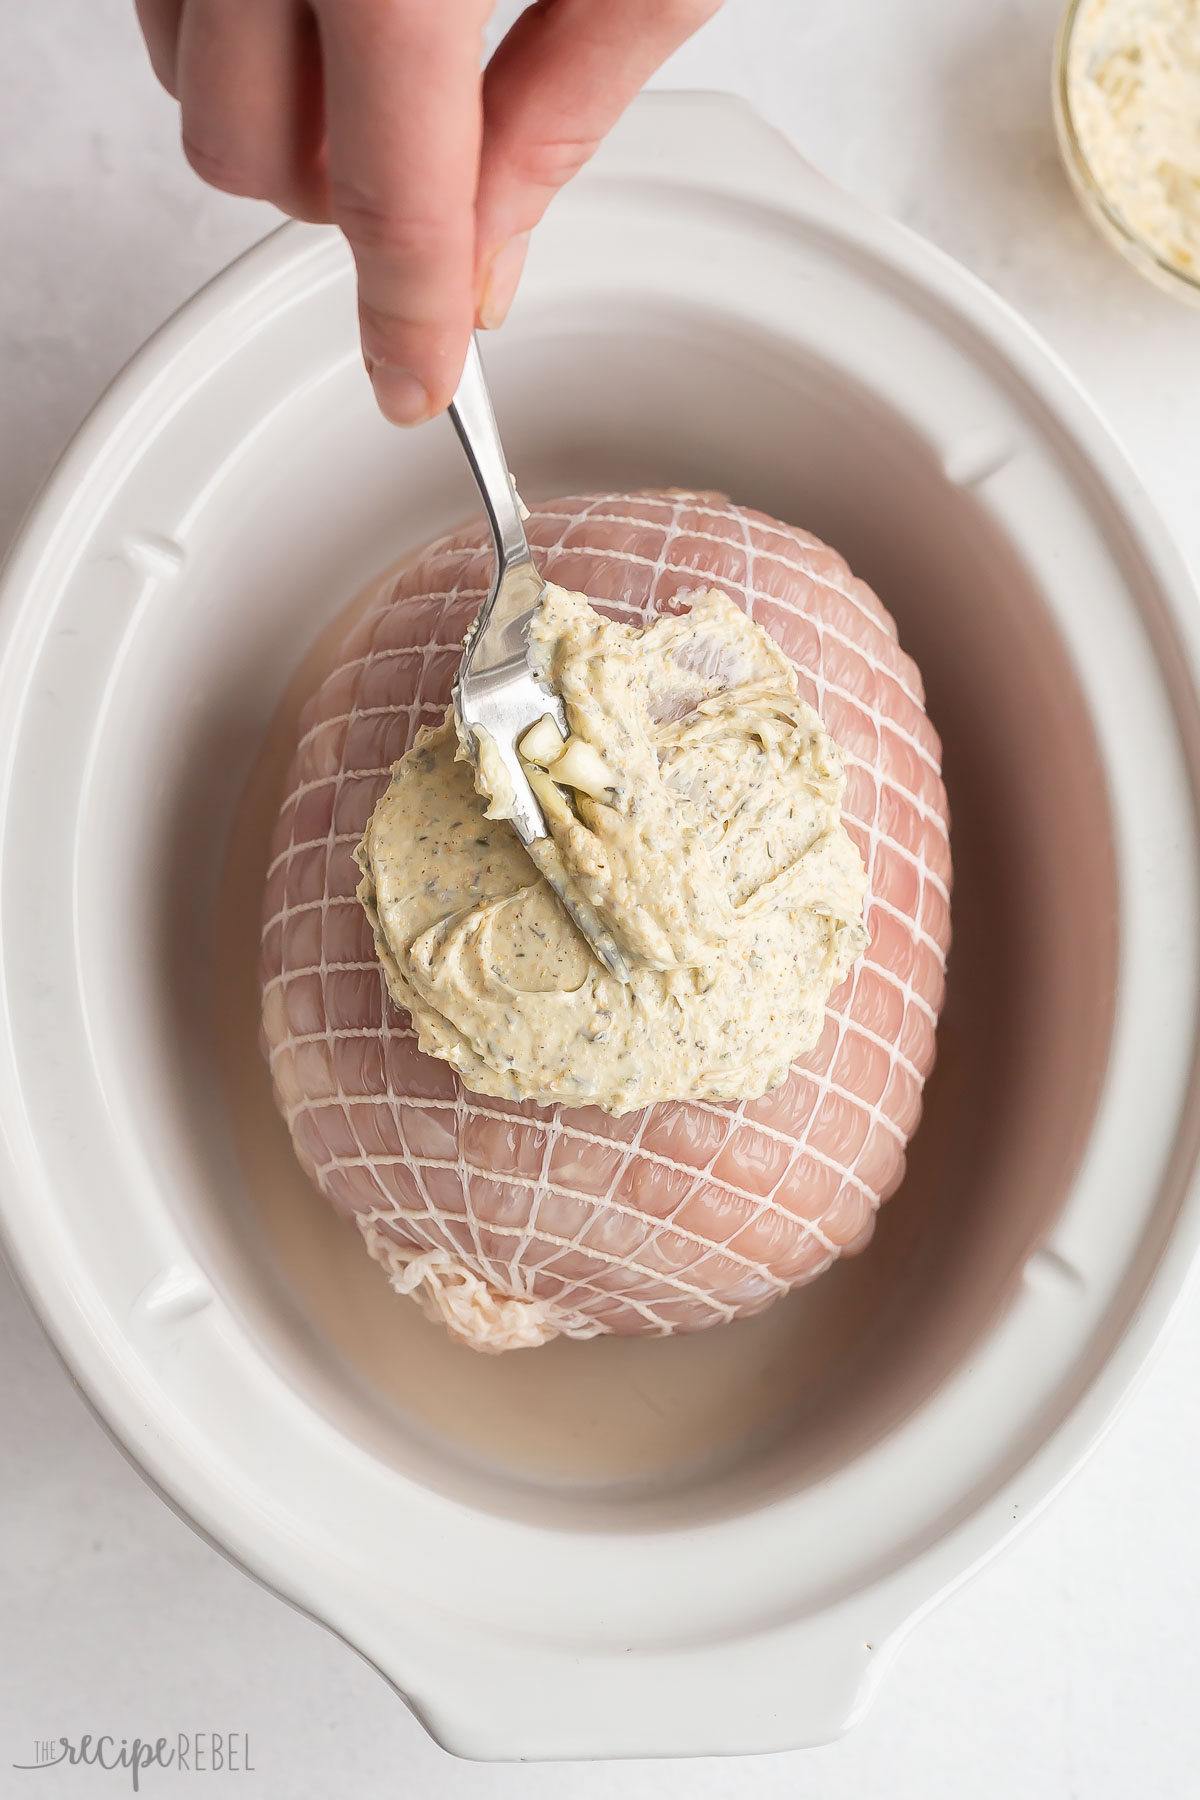 garlic butter being spread over turkey breast roast in slow cooker.